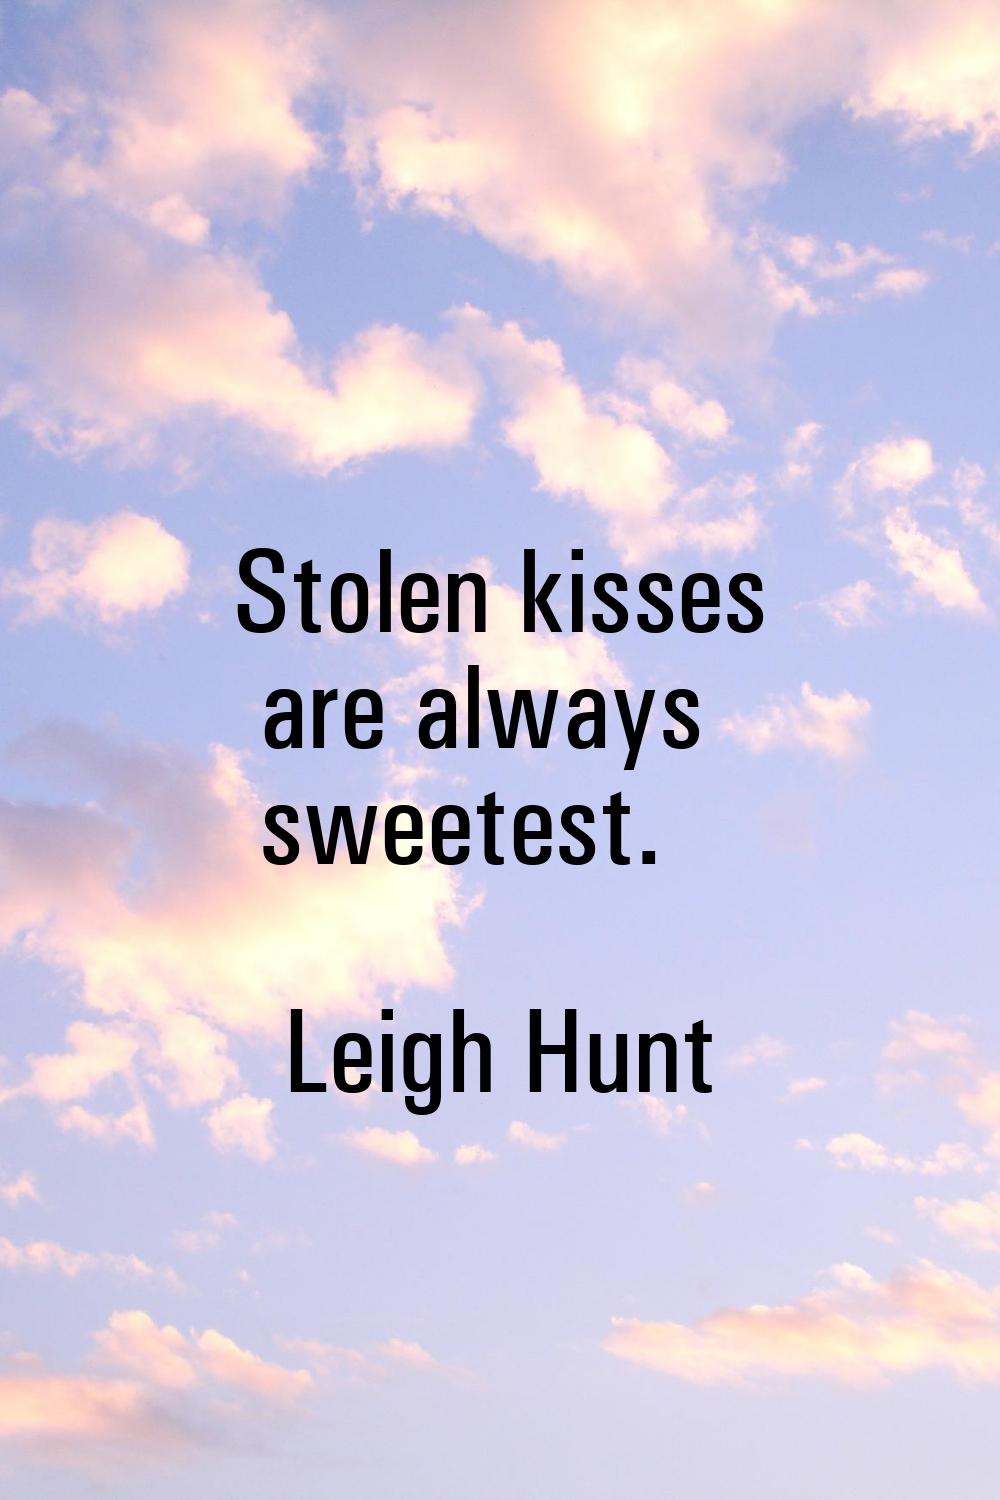 Stolen kisses are always sweetest.